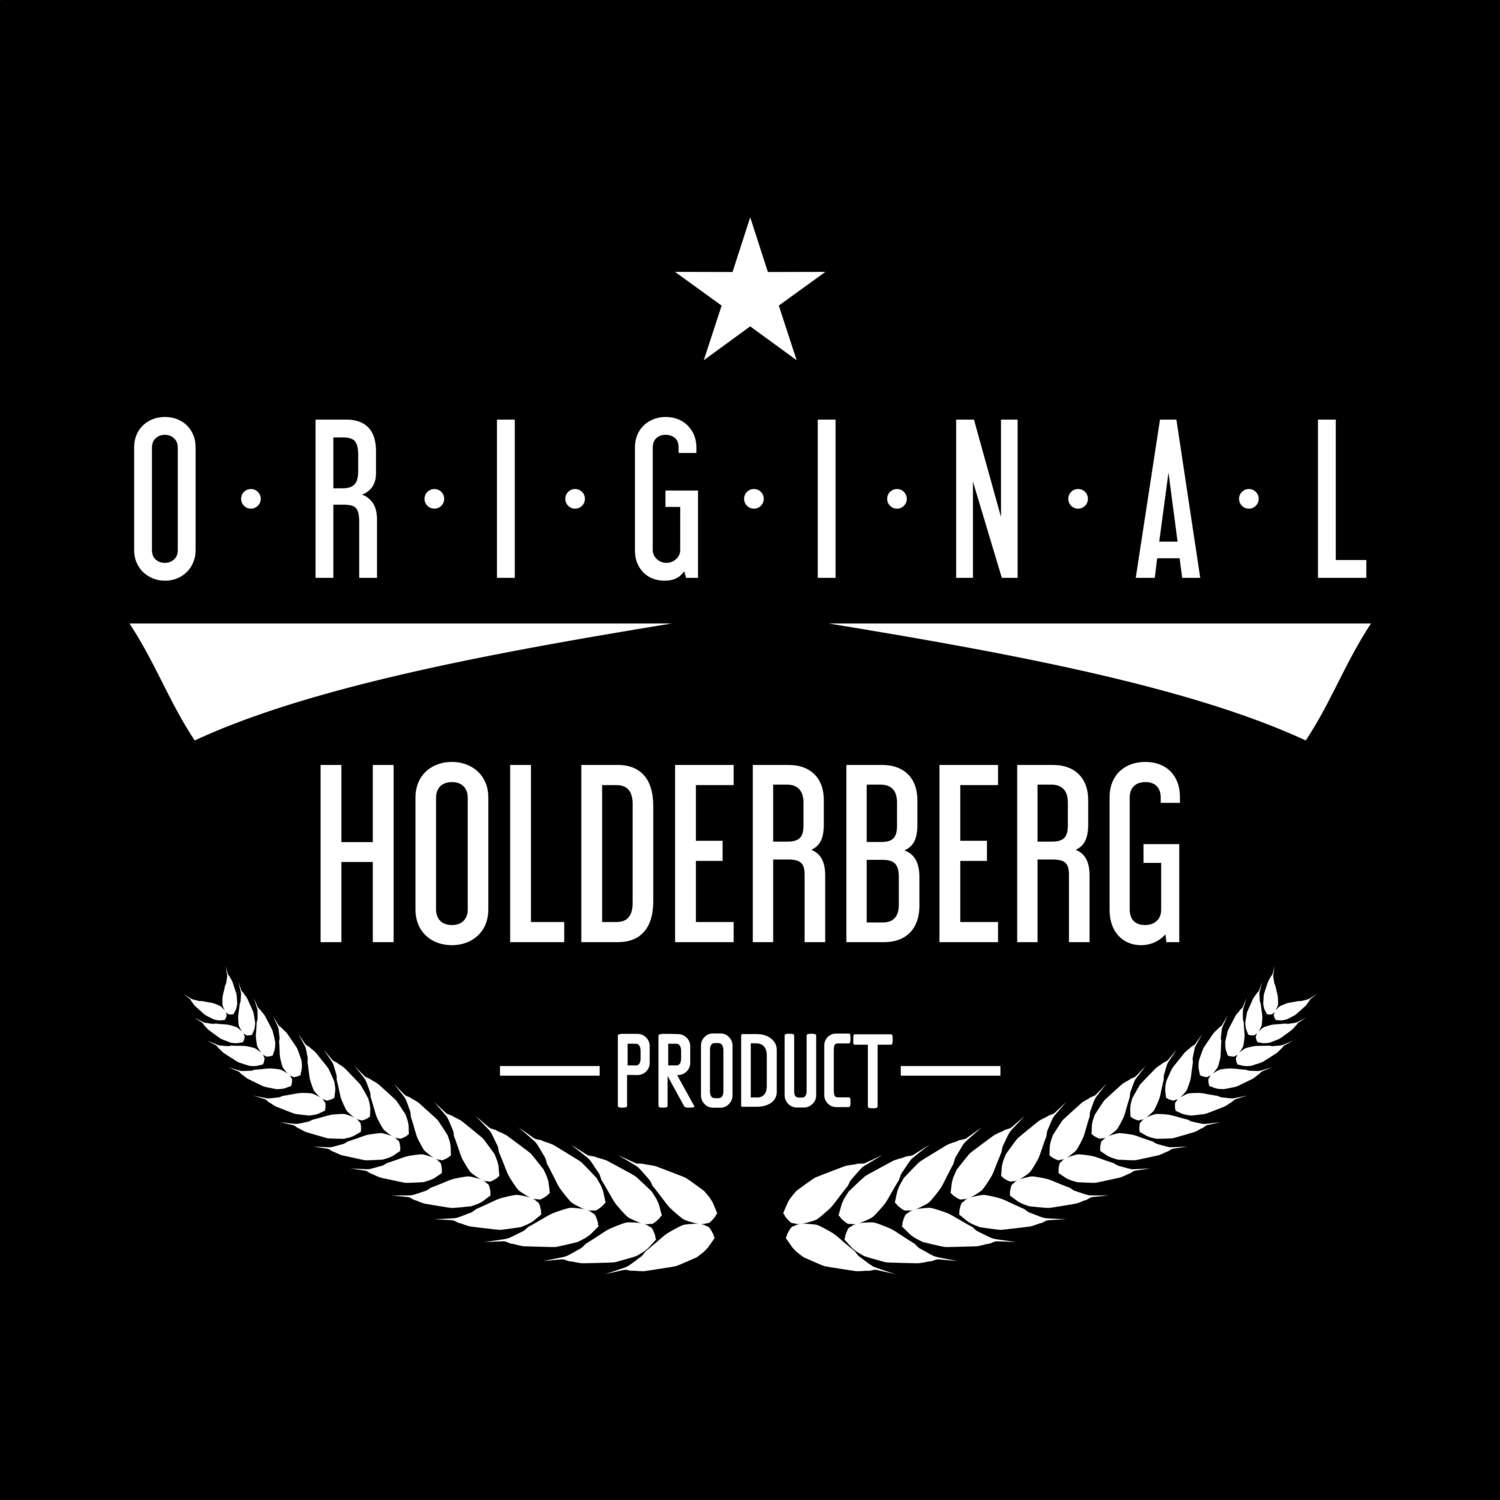 Holderberg T-Shirt »Original Product«